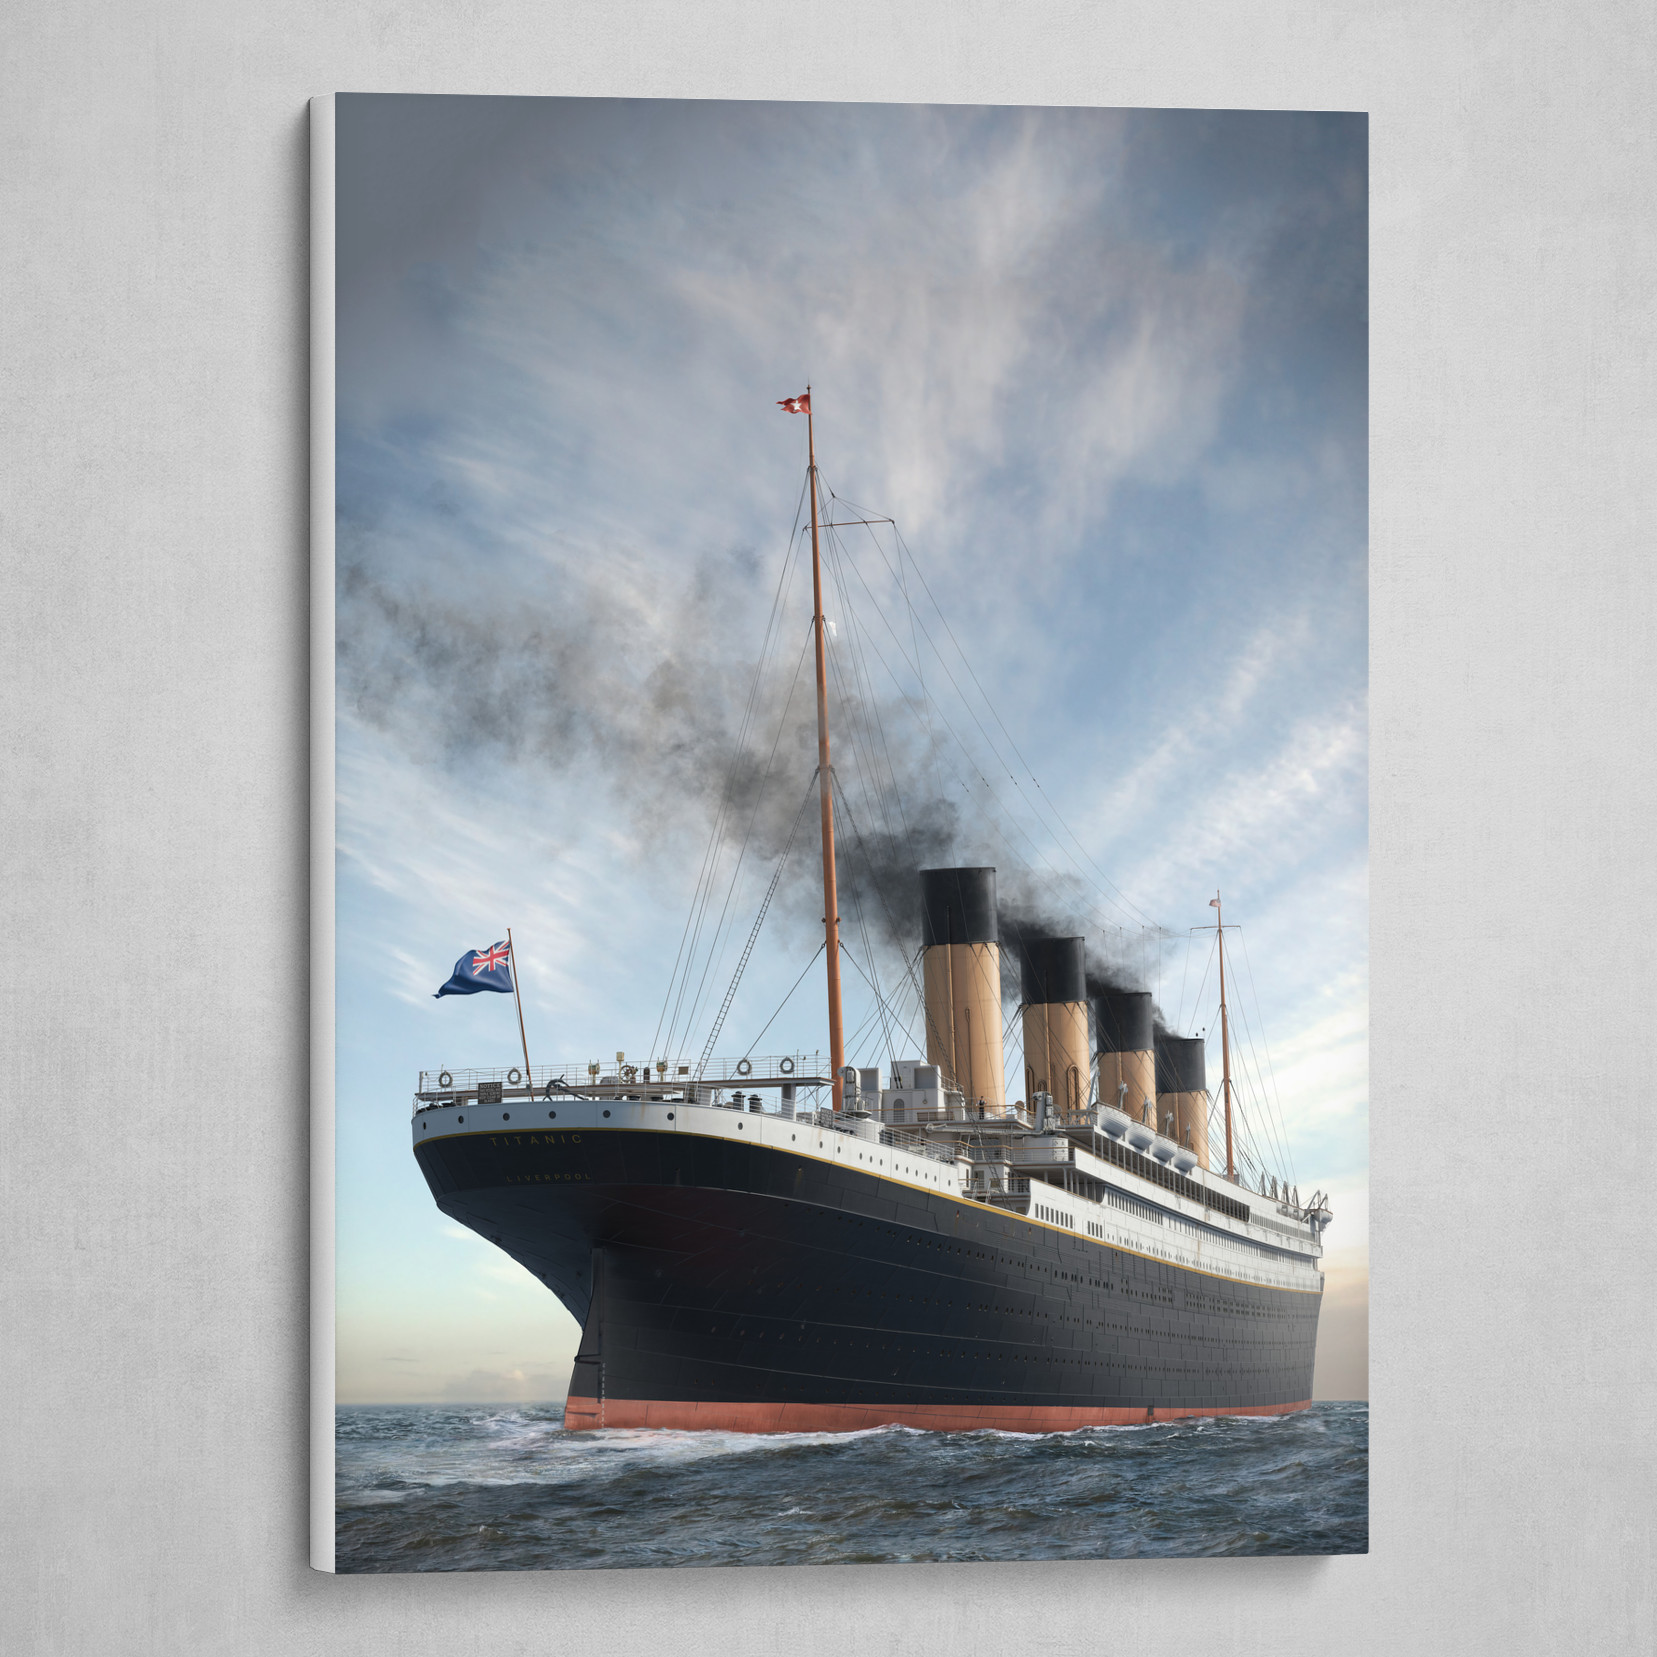 RMS Titanic - Stern View by Vasilije Ristovic